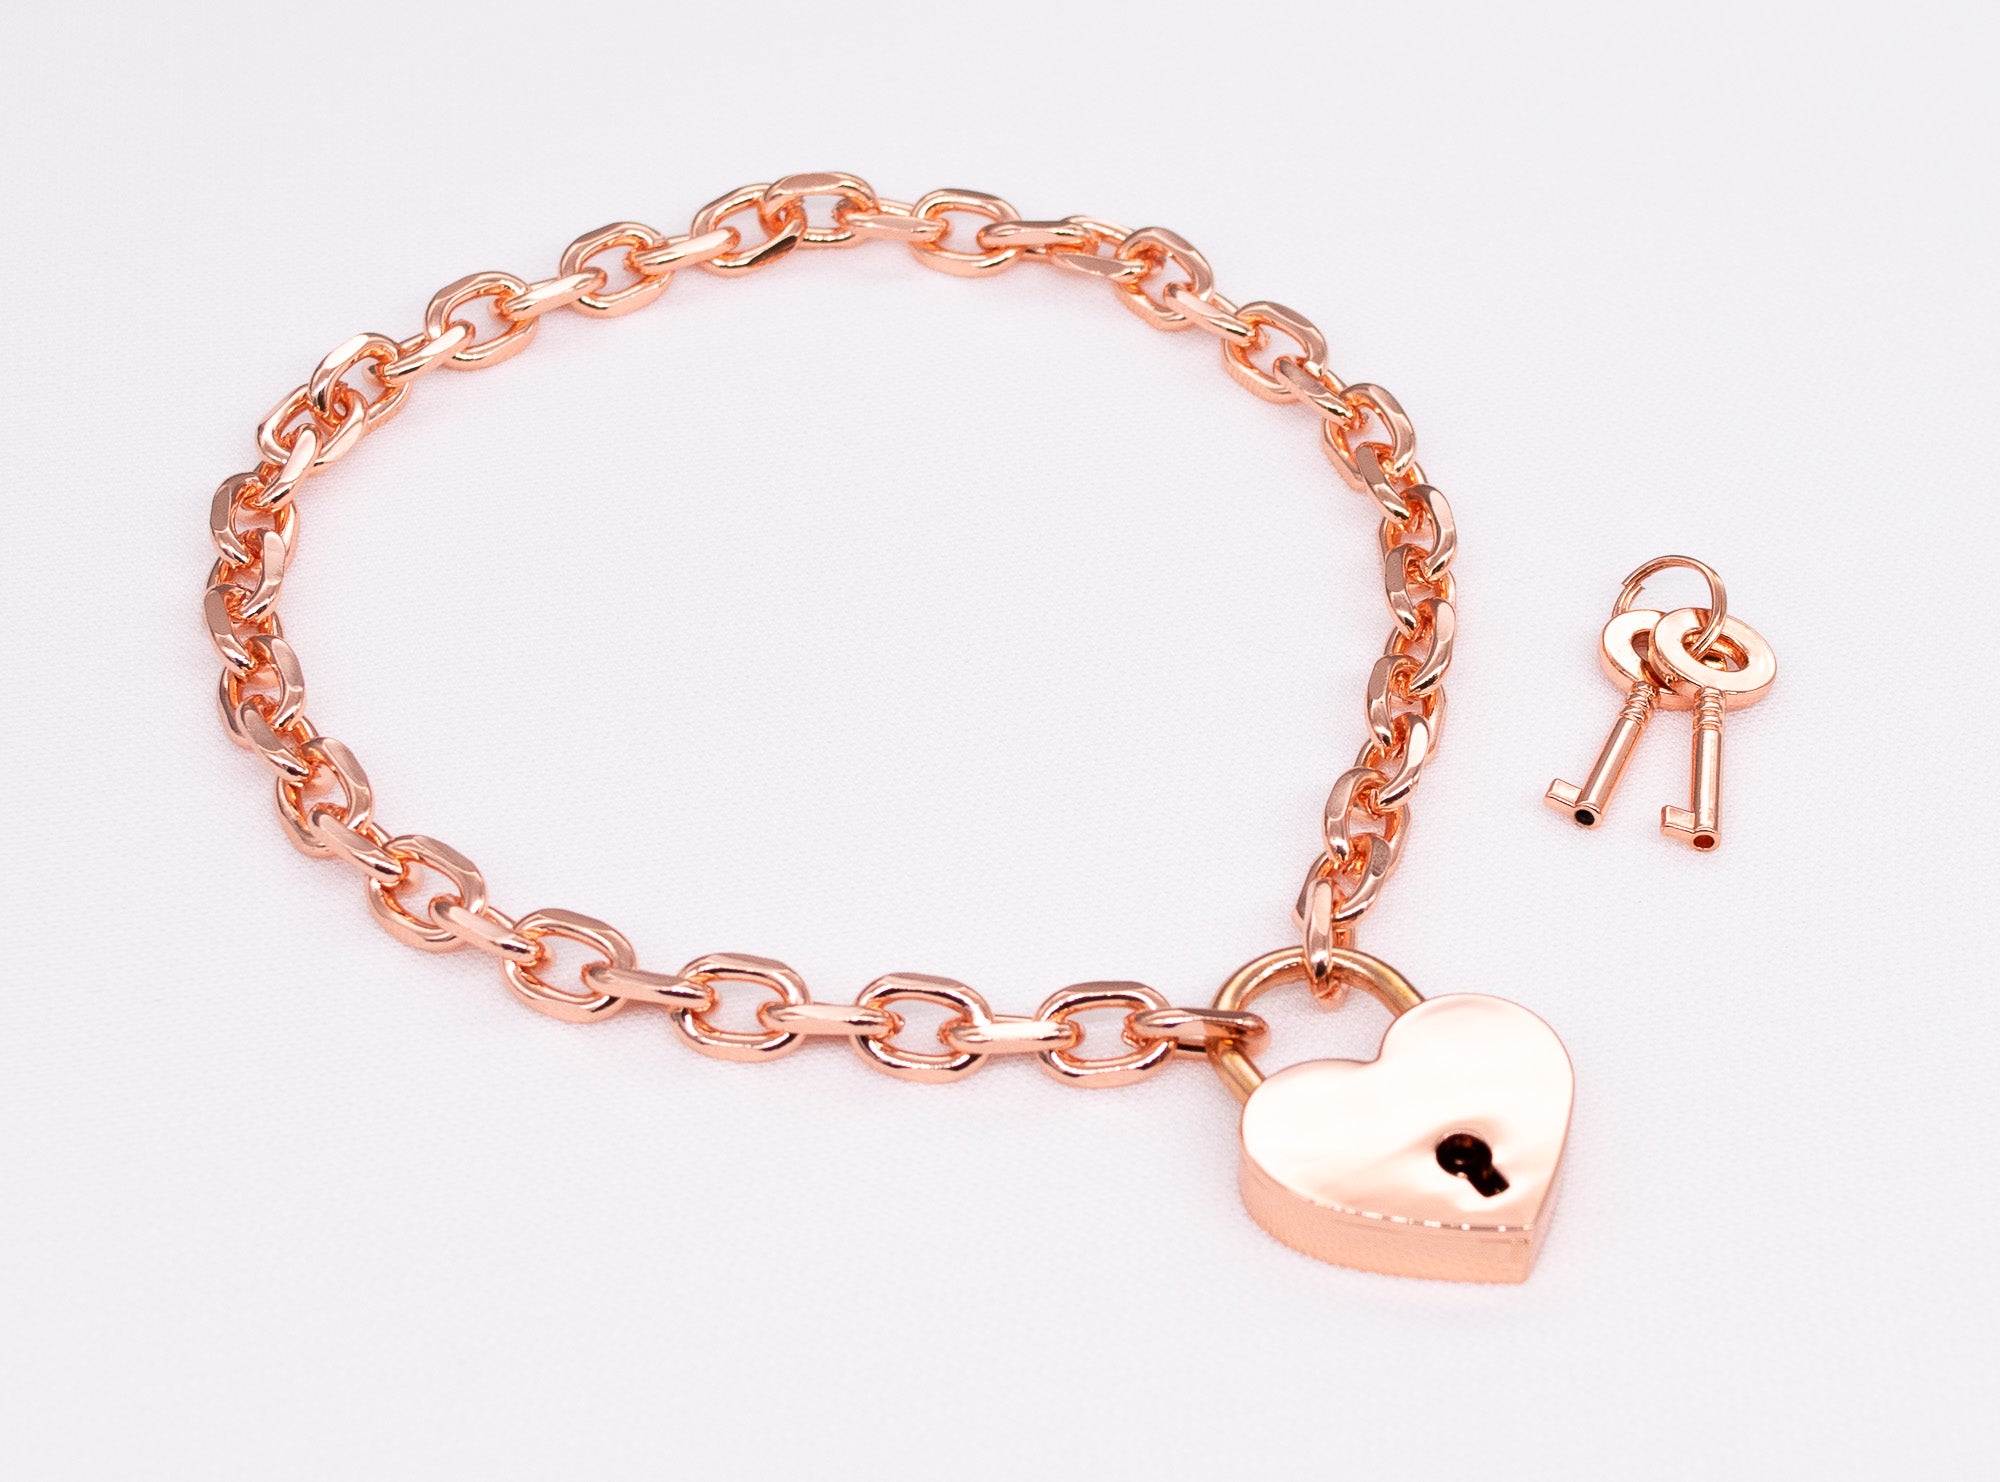 Discreet Day Collar - Rose Gold Heart Locked O-link Chain Choker